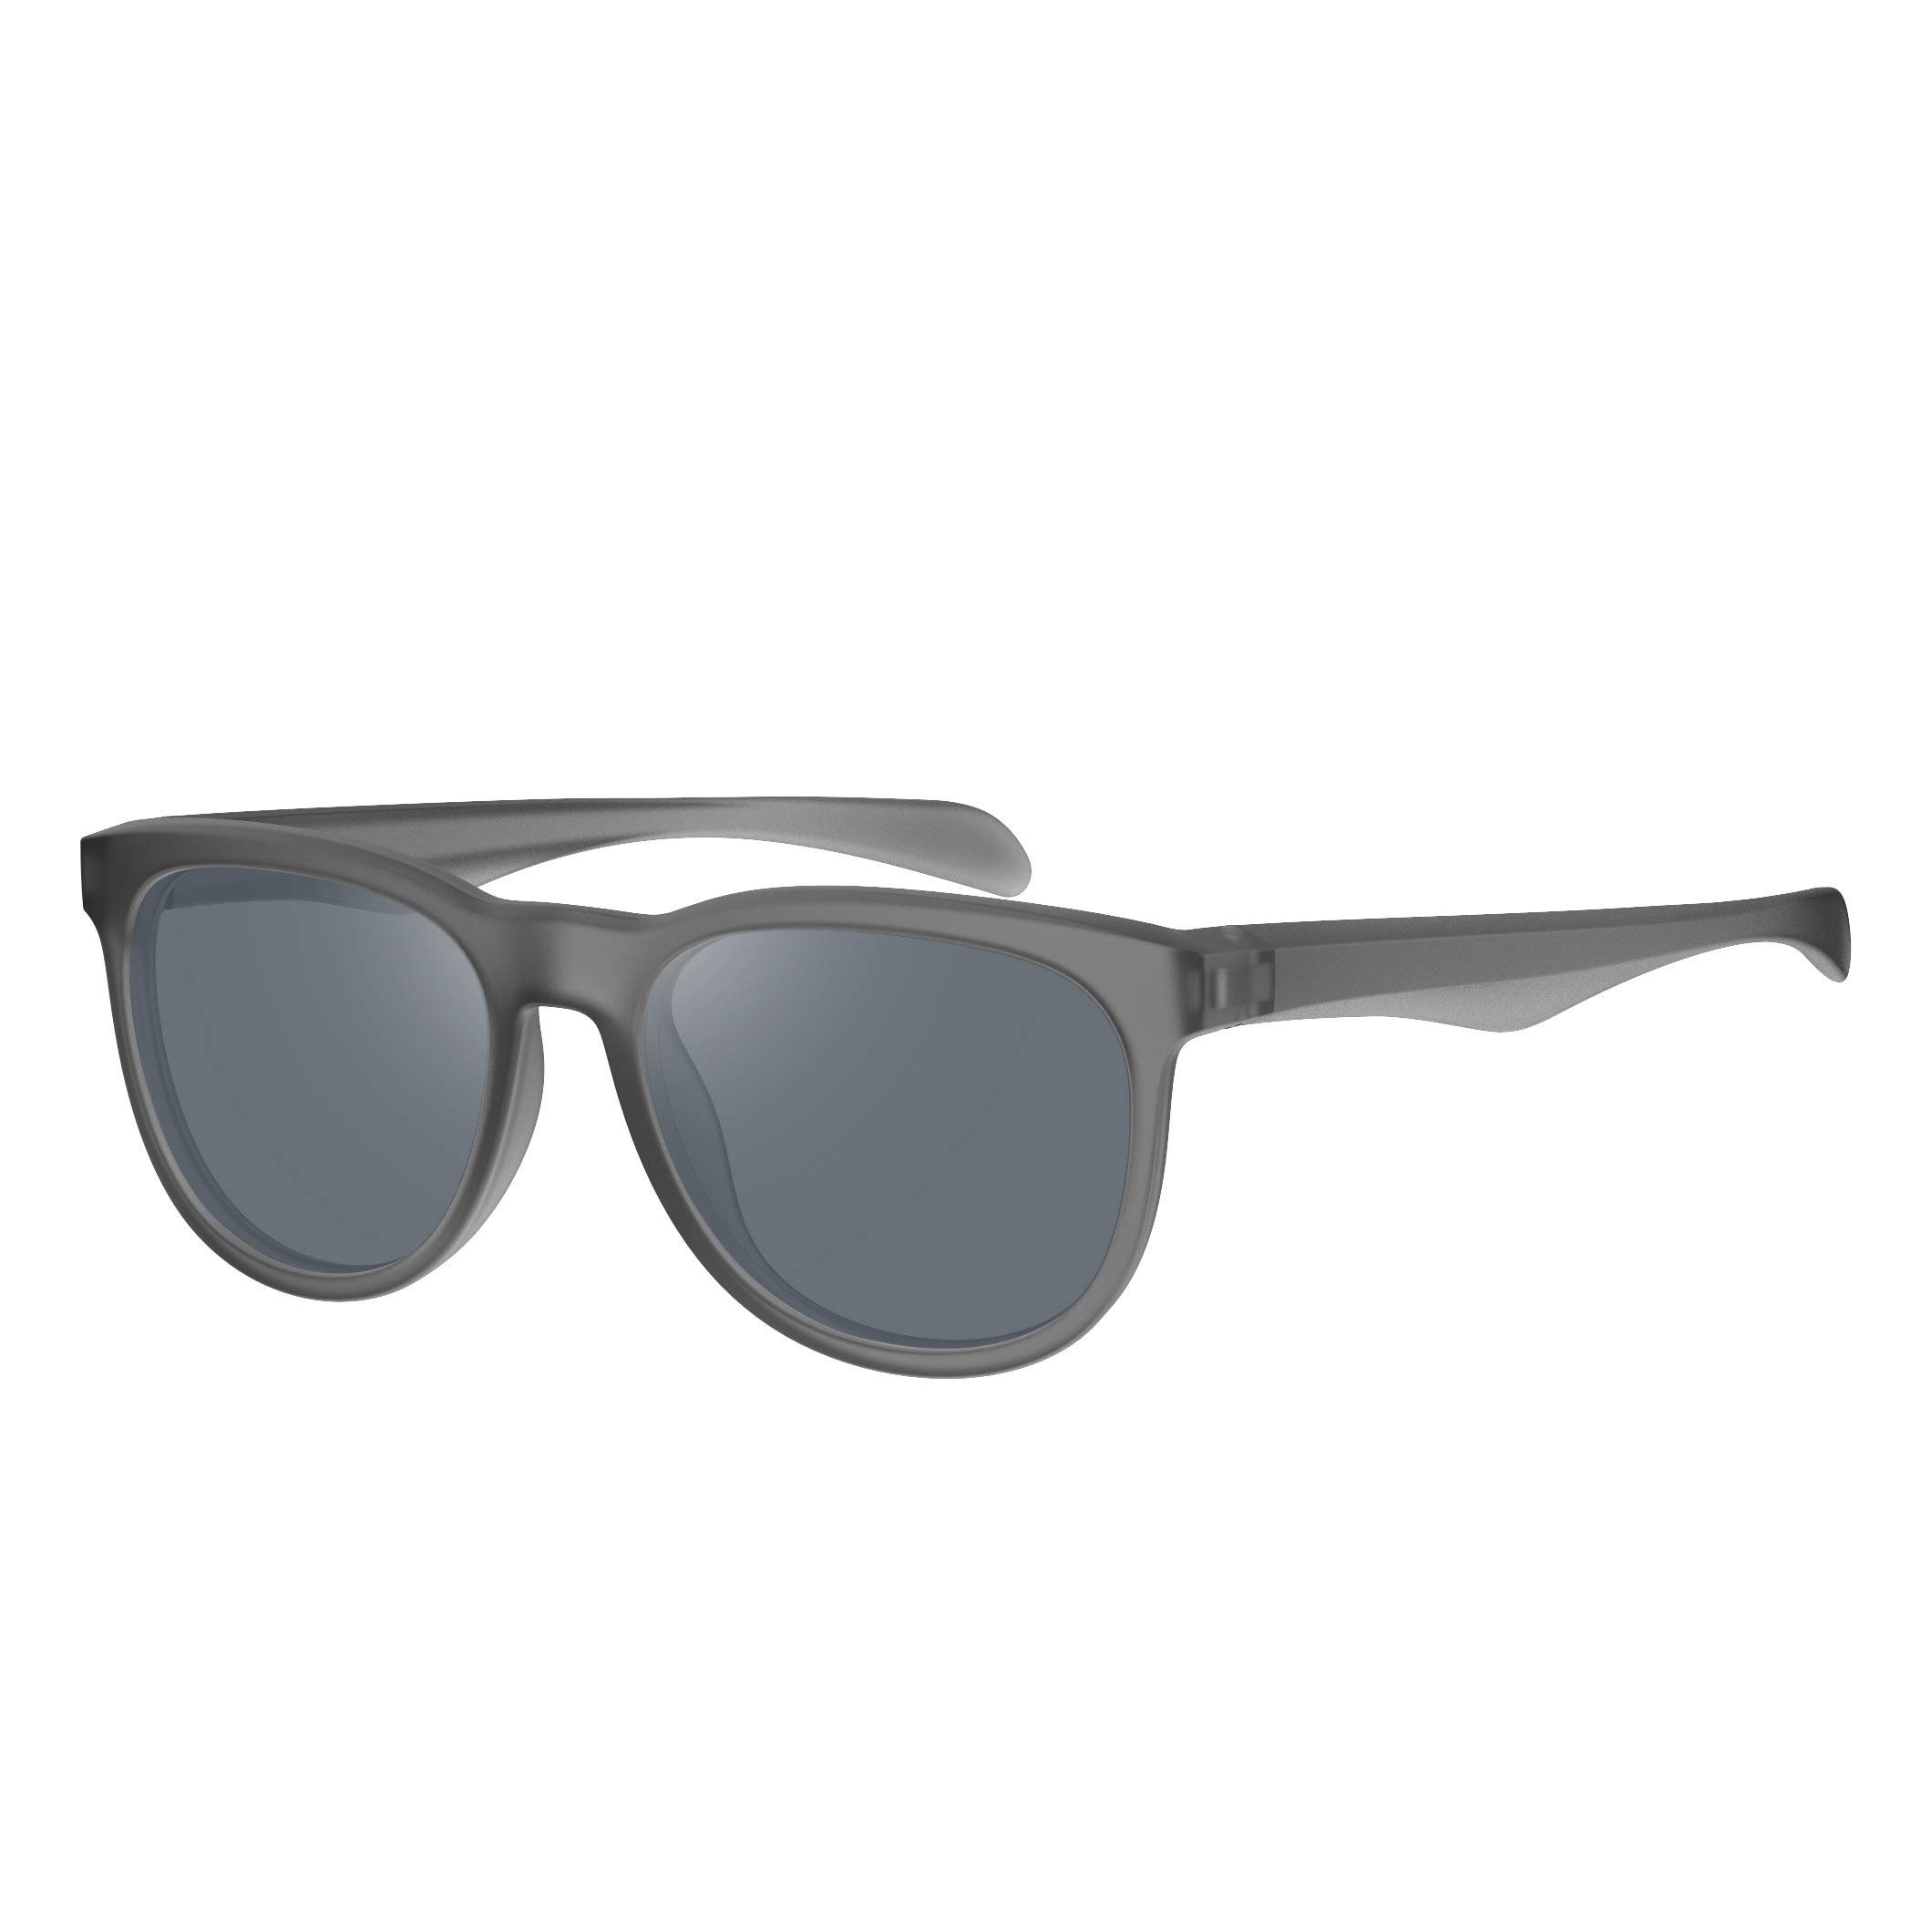 Elegear Sonnenbrille Polarisierte Elegante Brille (Panto-Form, Damen Retro) Grau